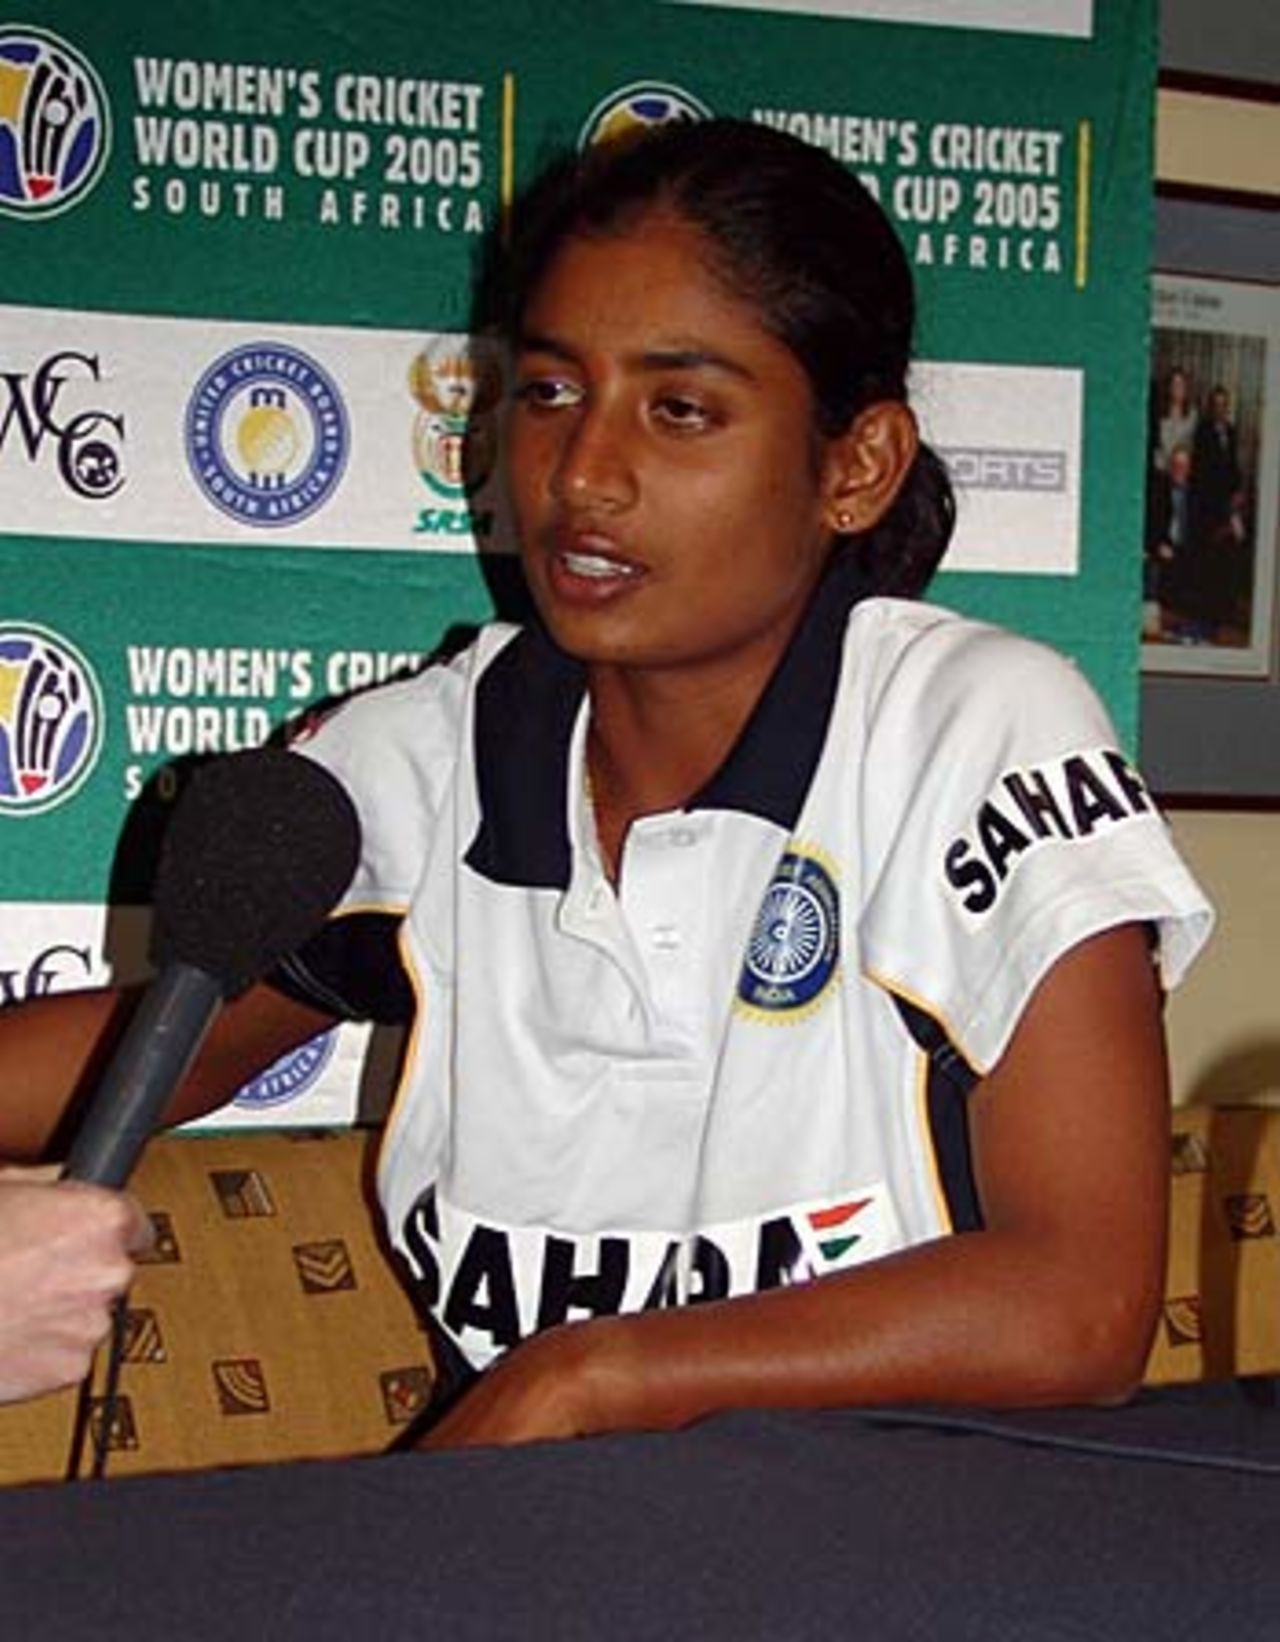 Mithali Raj faces the press after the final, Australia v India, Women's World Cup final, Centurion, April 10, 2005